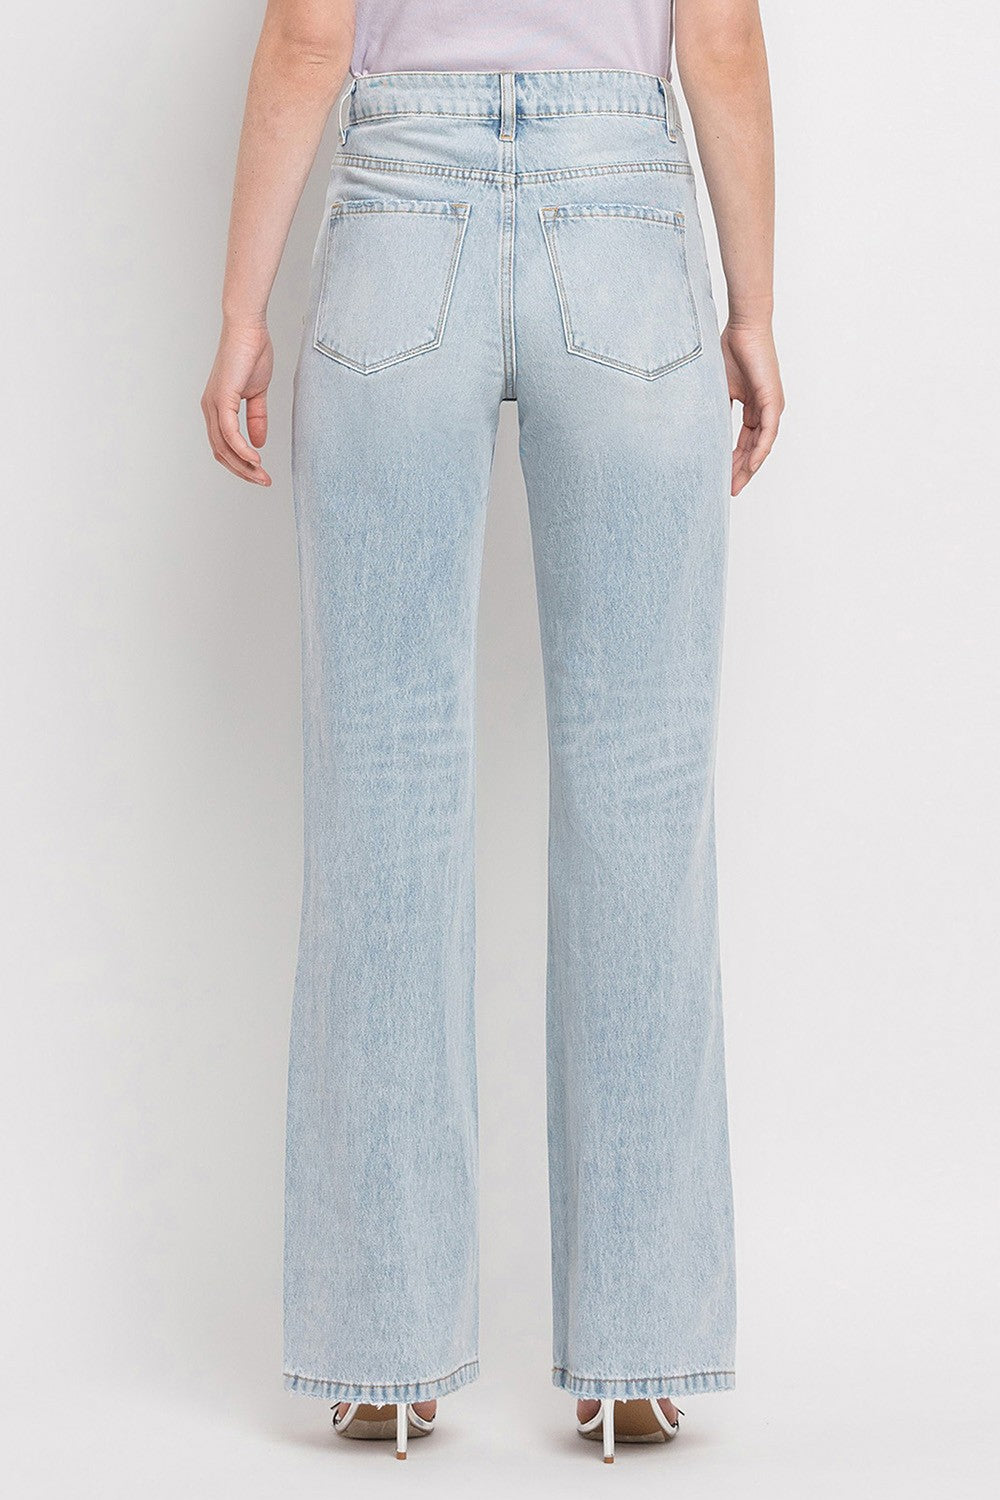 90'S Vintage Super High Rise Flare Jeans